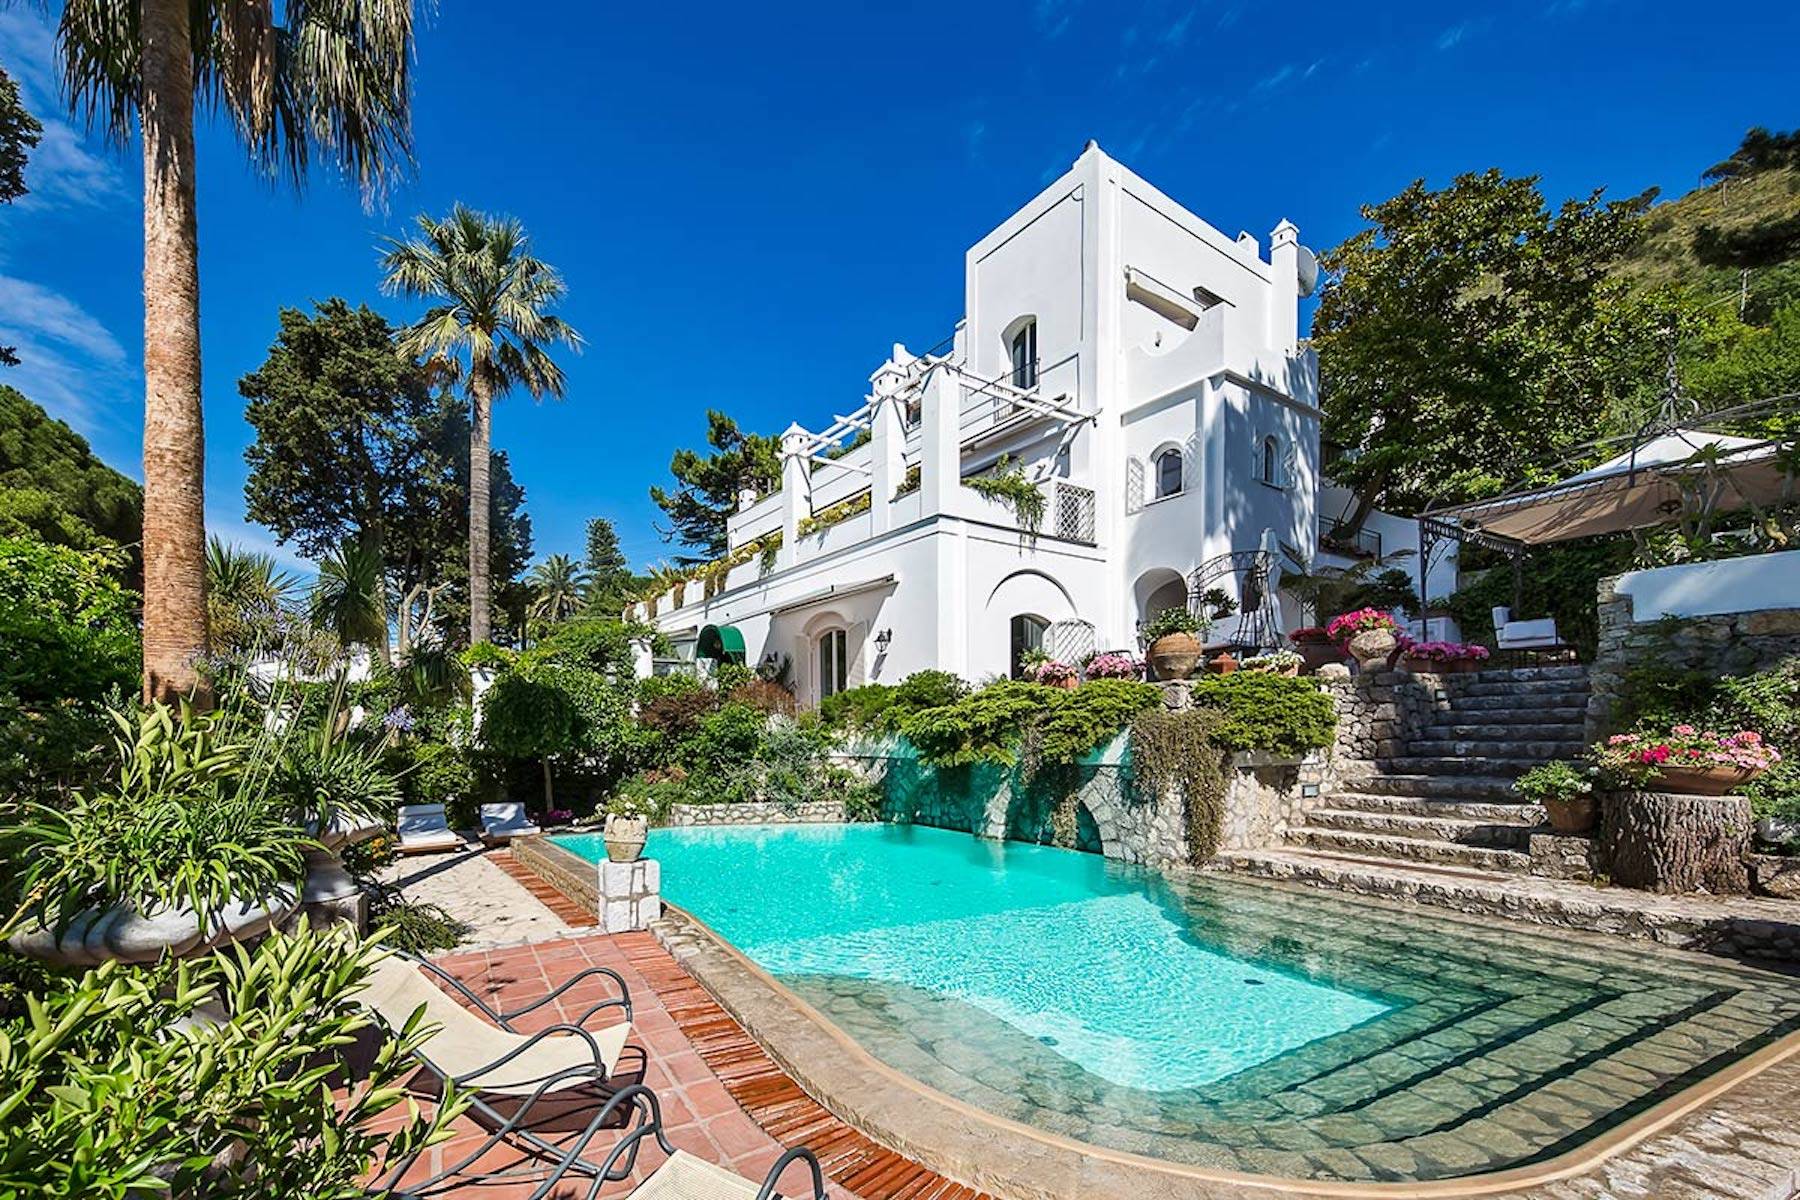 Outstanding nineteenth century Villa in enchanting Capri